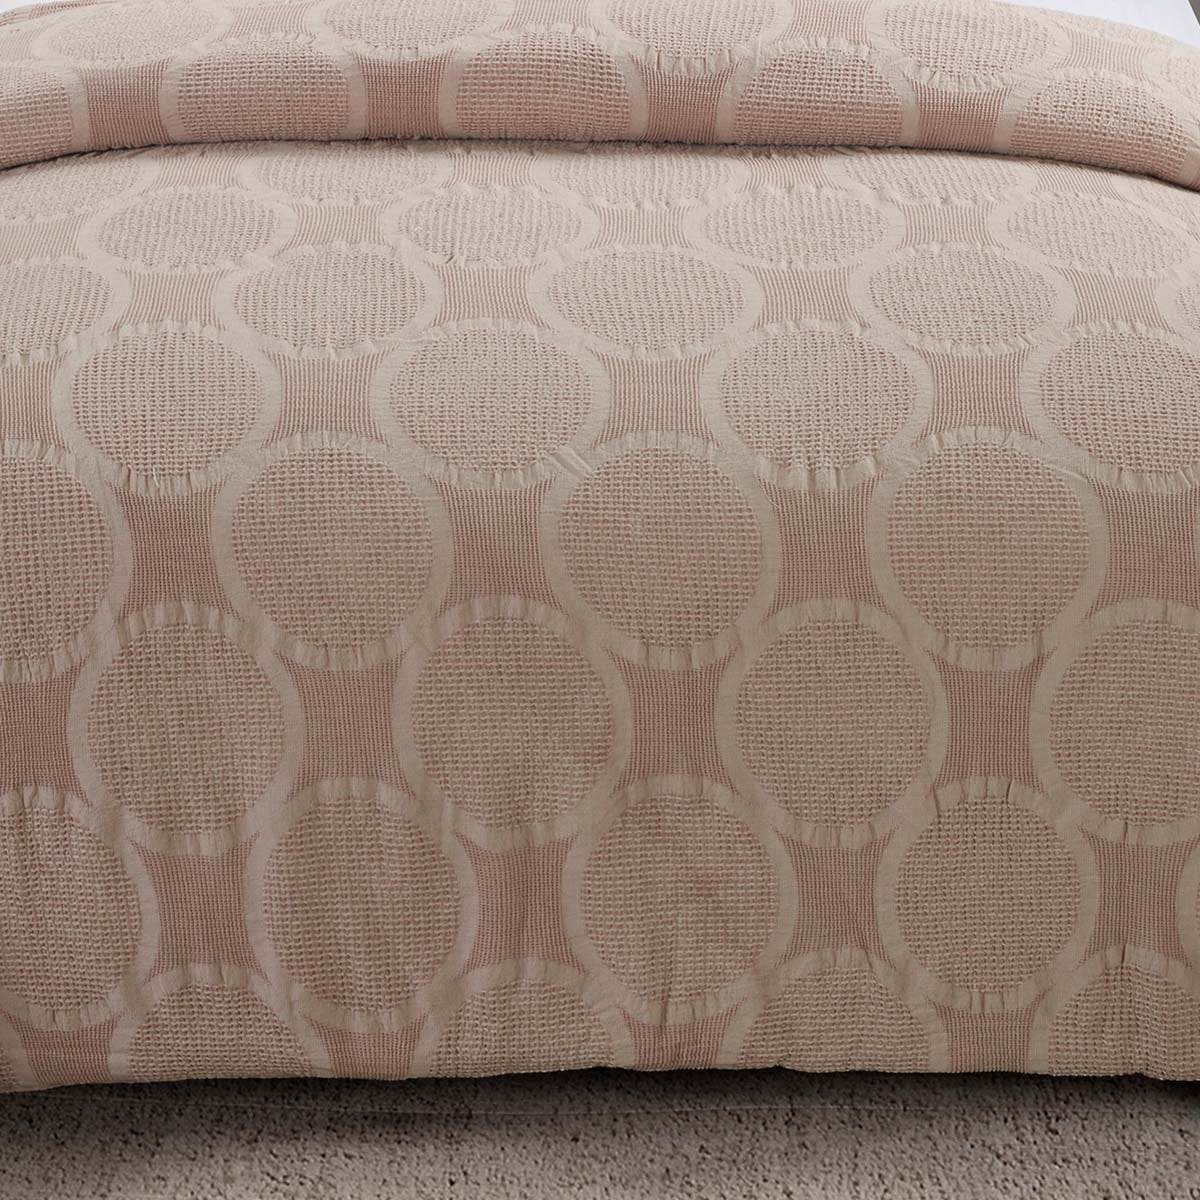 Leon Blush 3-Piece Comforter Set Comforter Sets By Donna Sharp